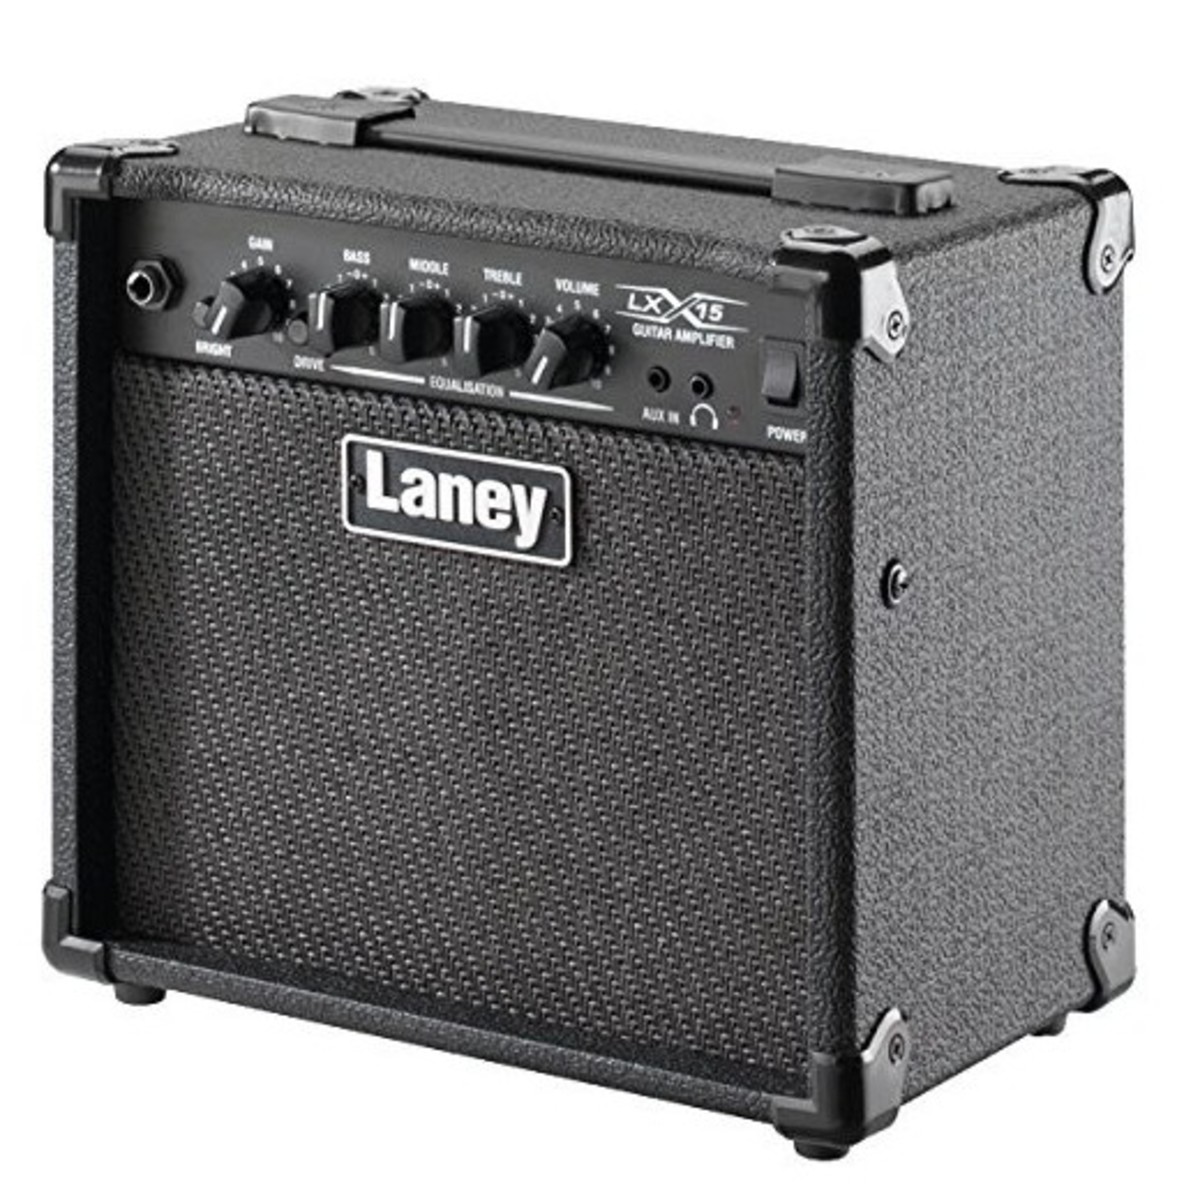 Laney Lx15 15w 2x5 Black - Combo amplificador para guitarra eléctrica - Variation 1